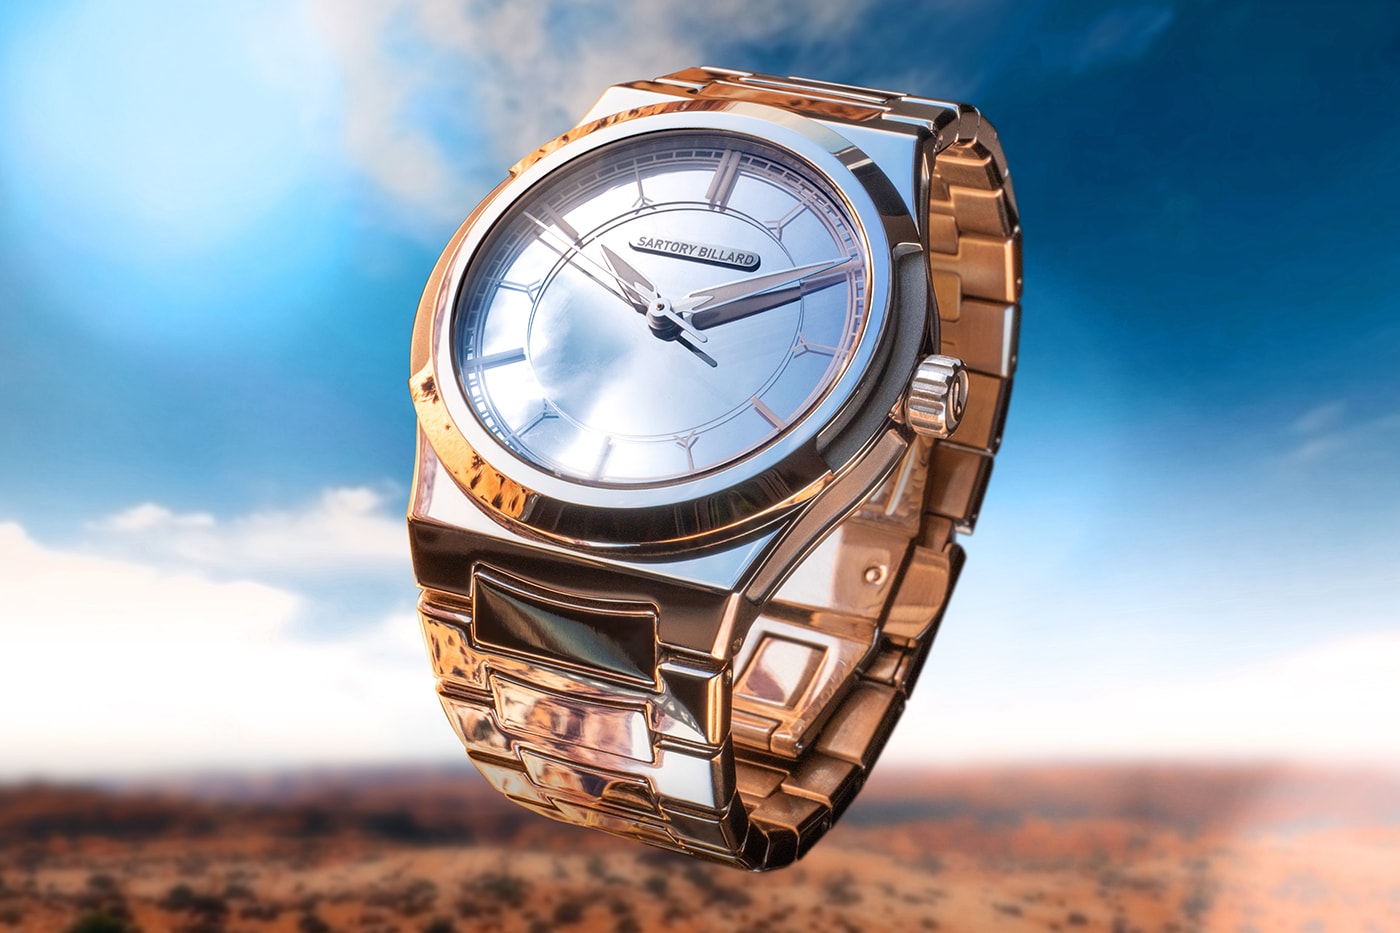 Grail Watch 11 Sartory Billard SB07 "Ghost" All-Mirror Polished Revolution Watches Limited Edition Release Info